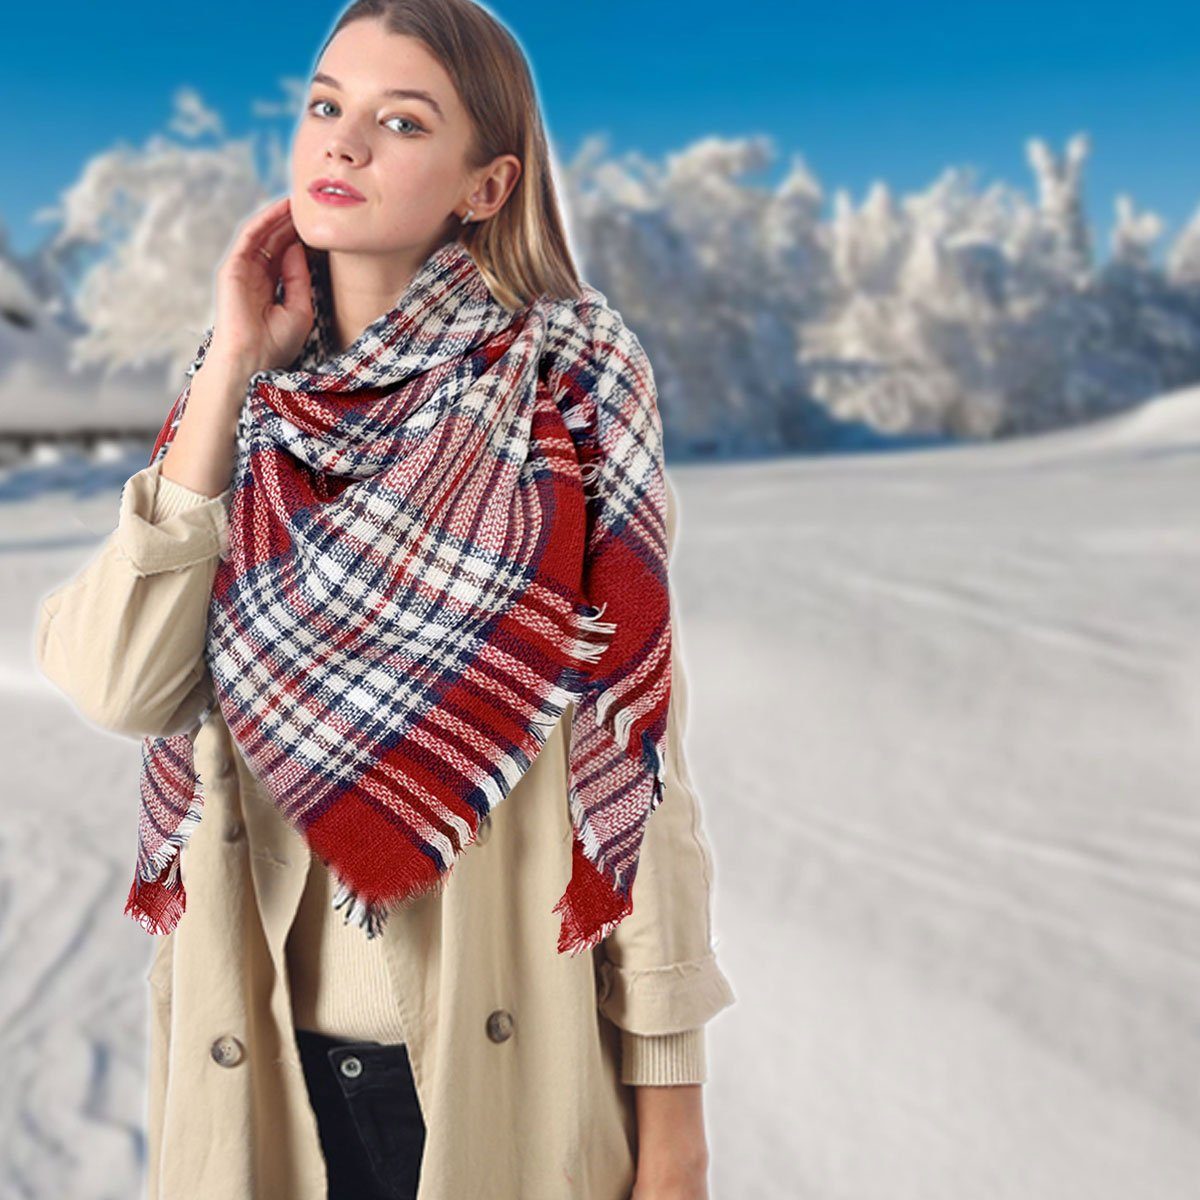 Jormftte Modeschal Karierter Warmer Frauen für kariert Datum Damen Winter,Damen-Schals,Für den Schal rot weiß